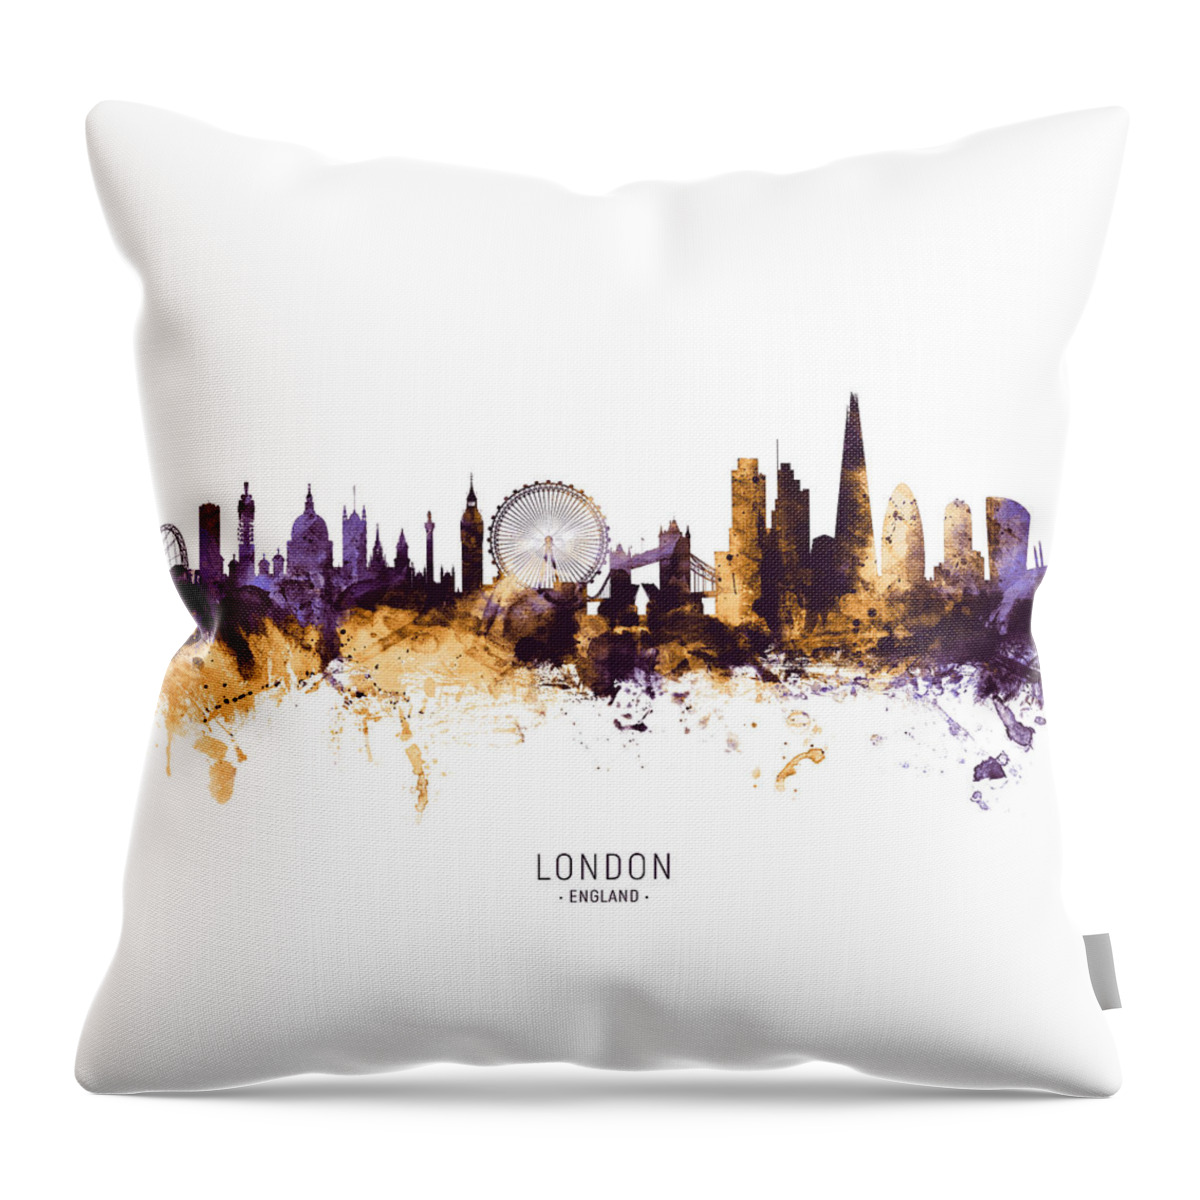 London Throw Pillow featuring the digital art London England Skyline by Michael Tompsett